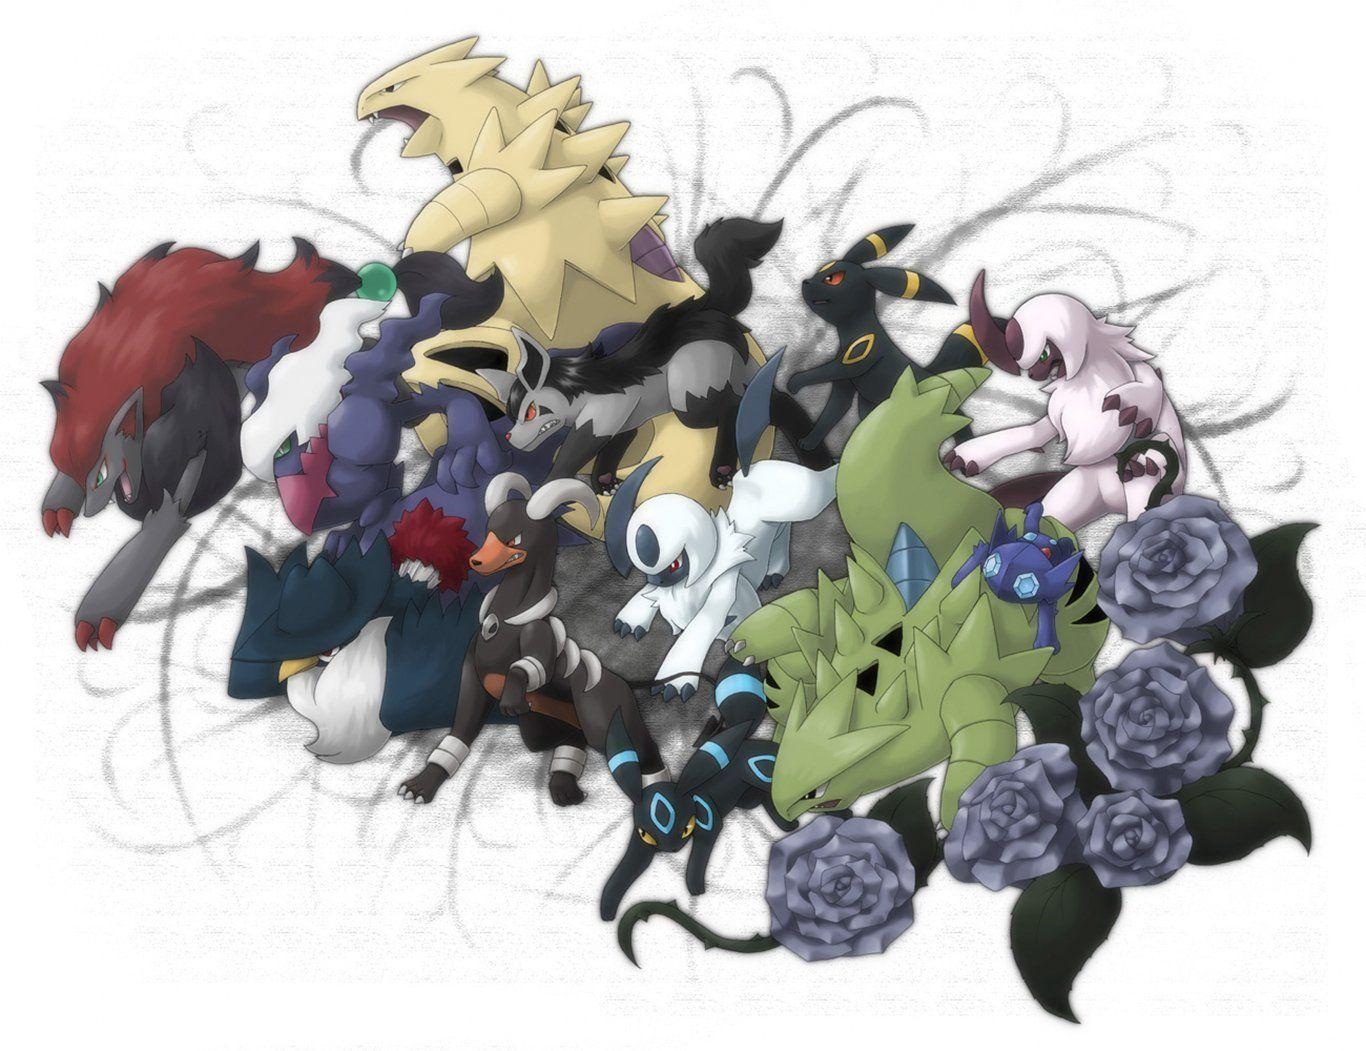 Sableye (Pokémon) HD Wallpaper and Background Image